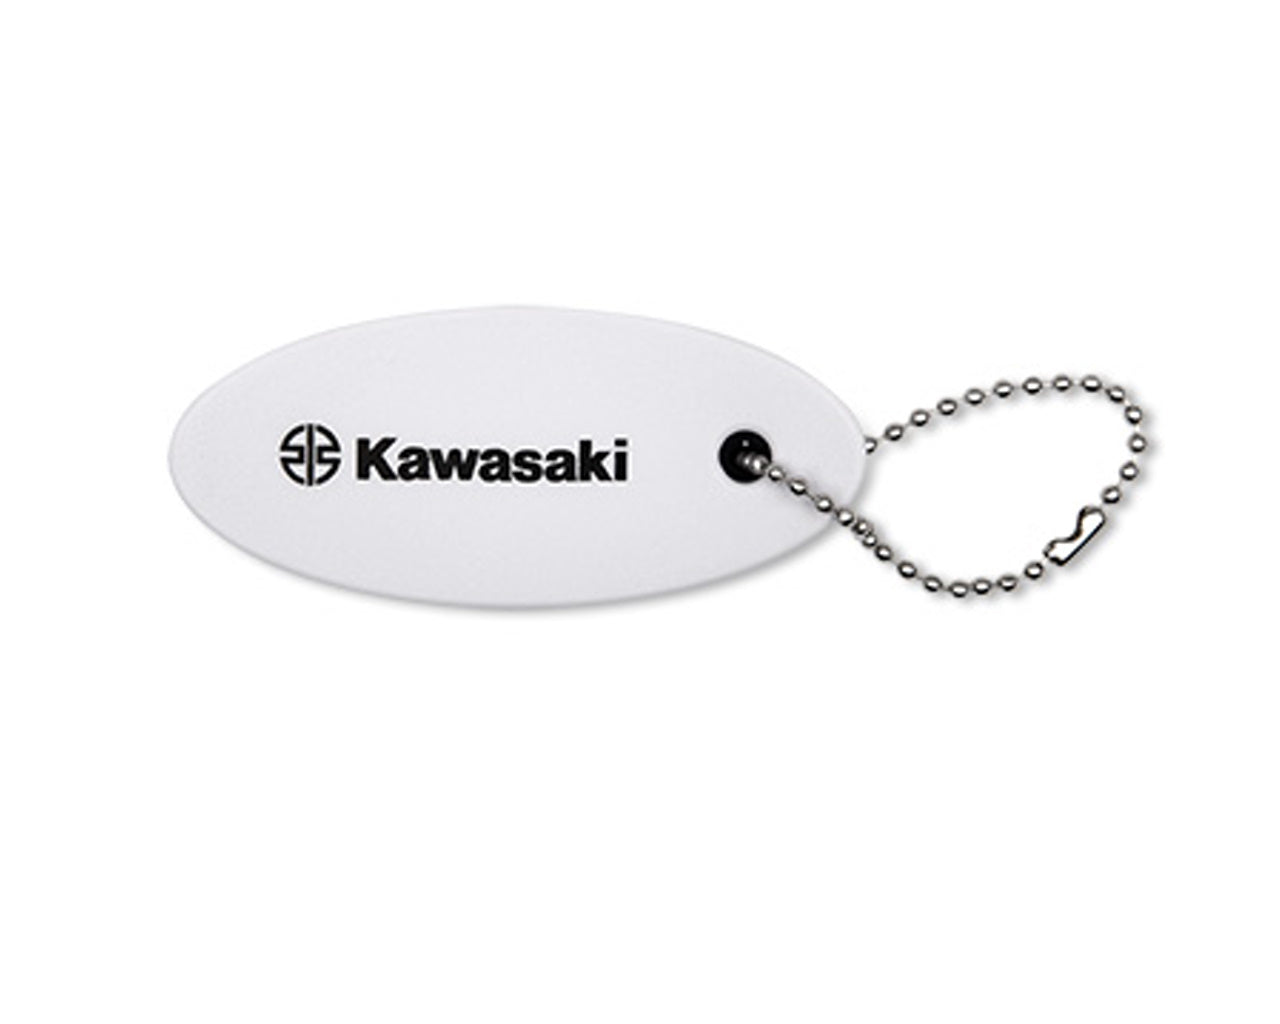 Kawasaki River Mark White Floating Keychain Keyfob  K062-8926-BKNS